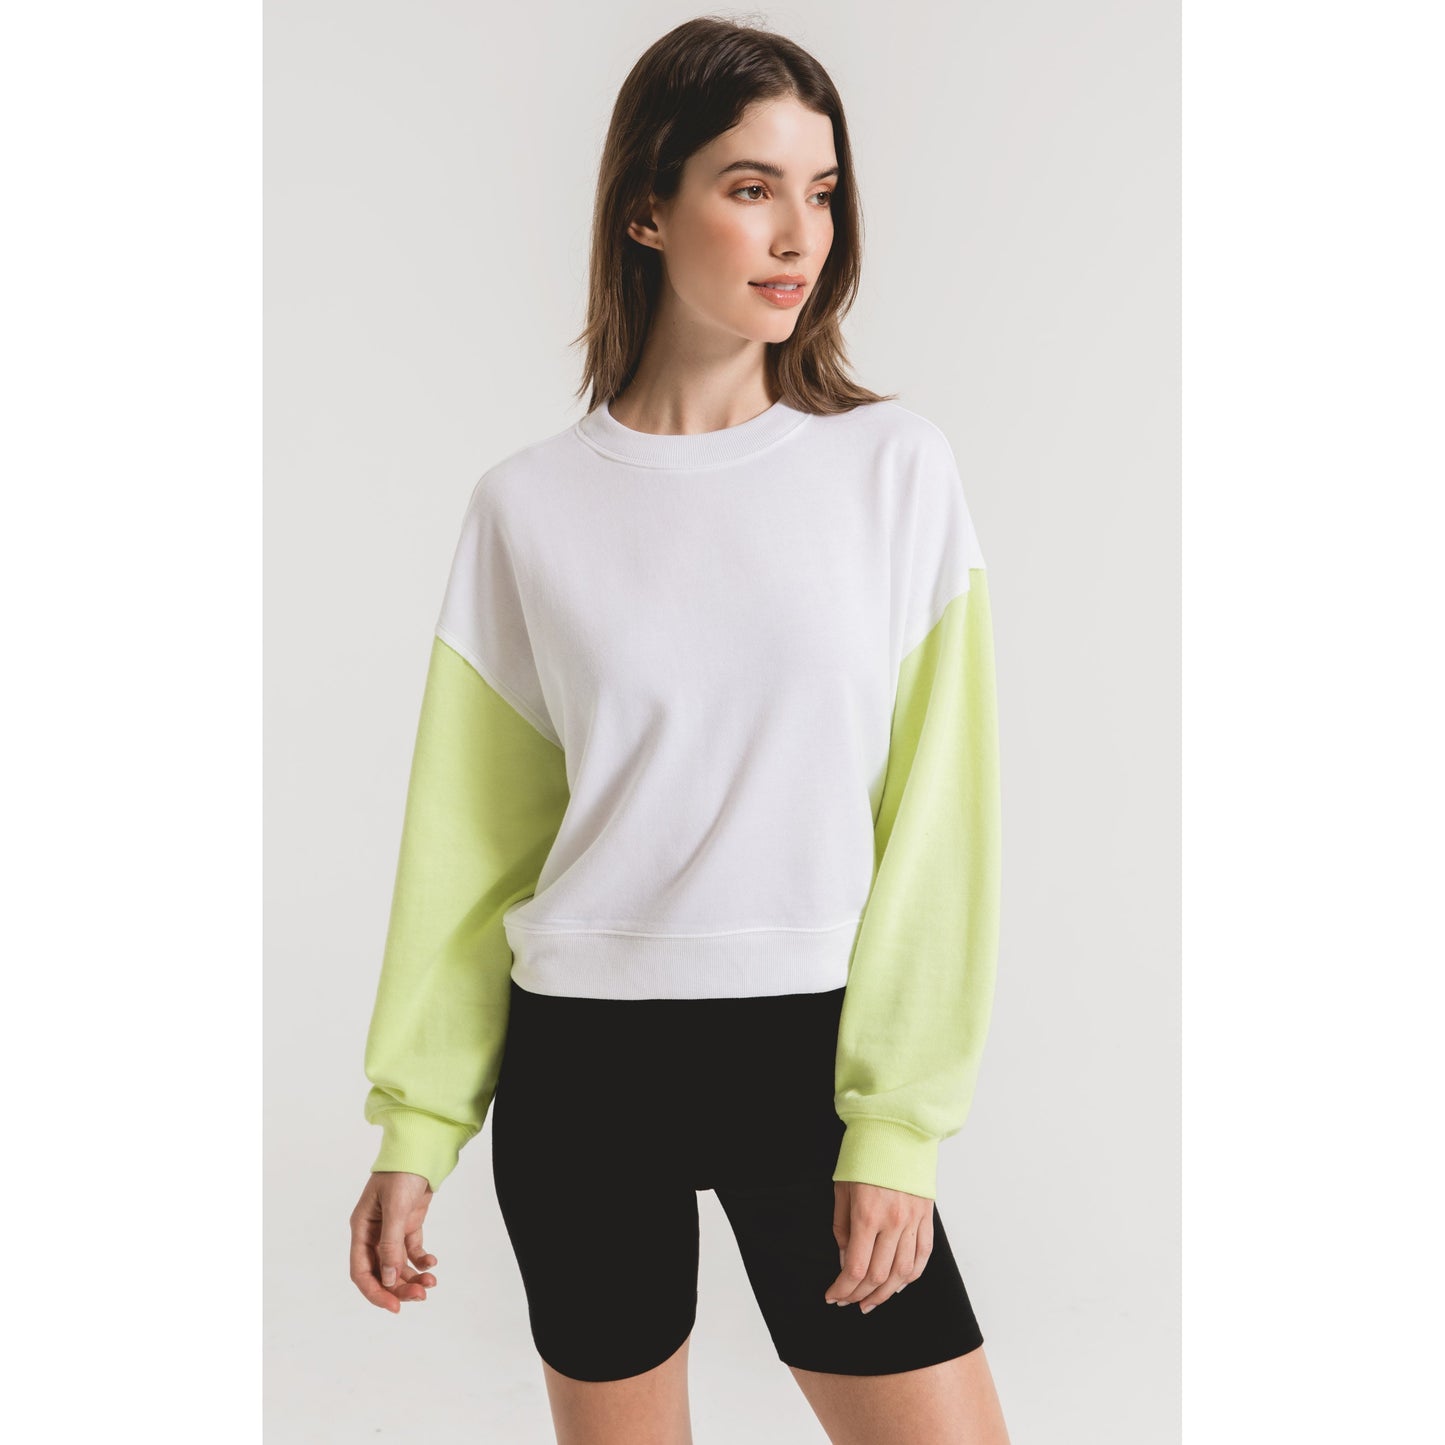 The Colorblock Neon Sleeve Sweatshirt